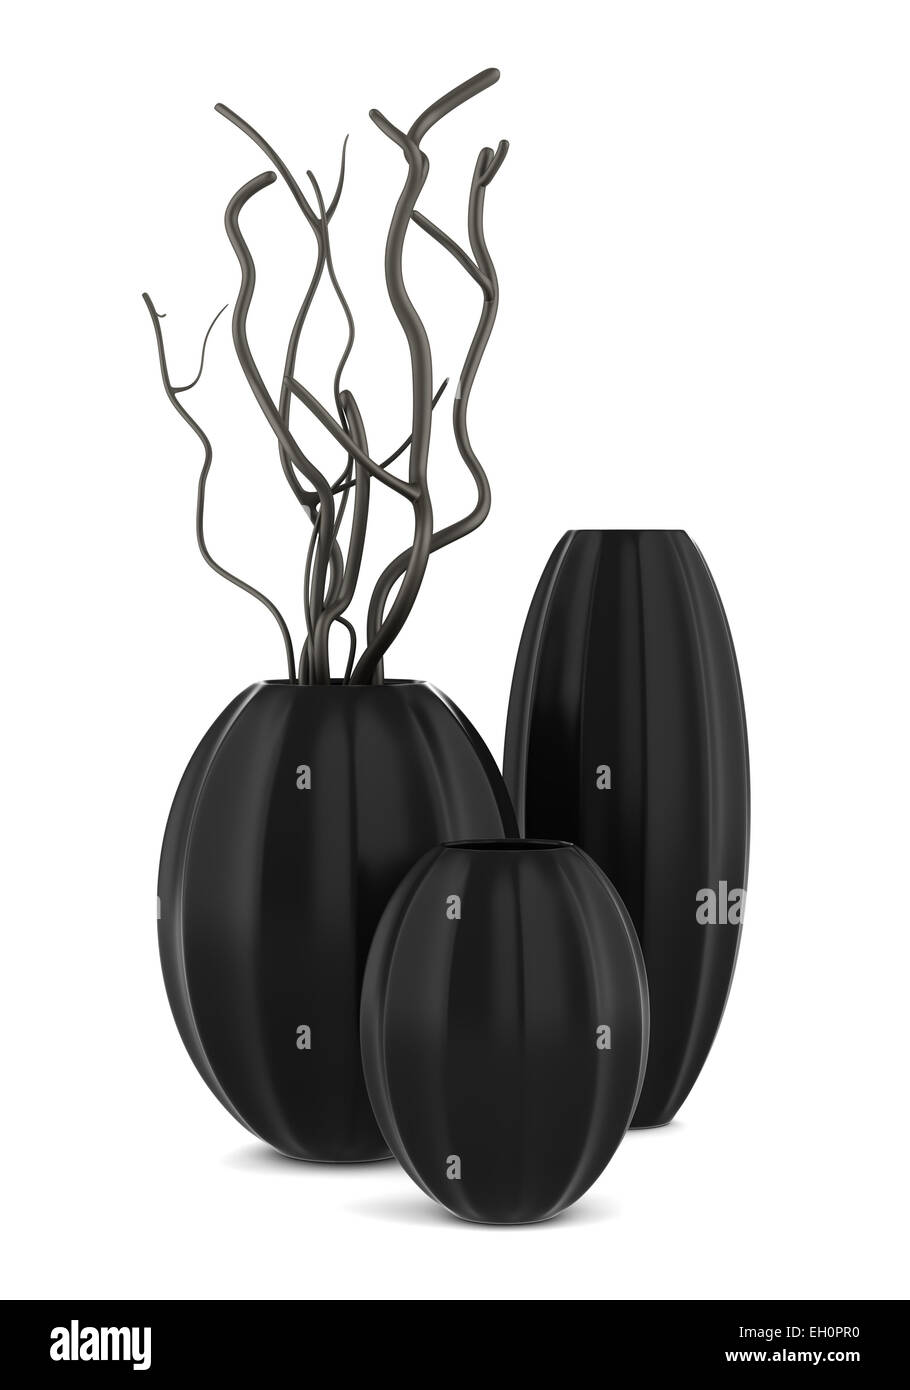 three black vases with dry wood isolated on white background Stock Photo